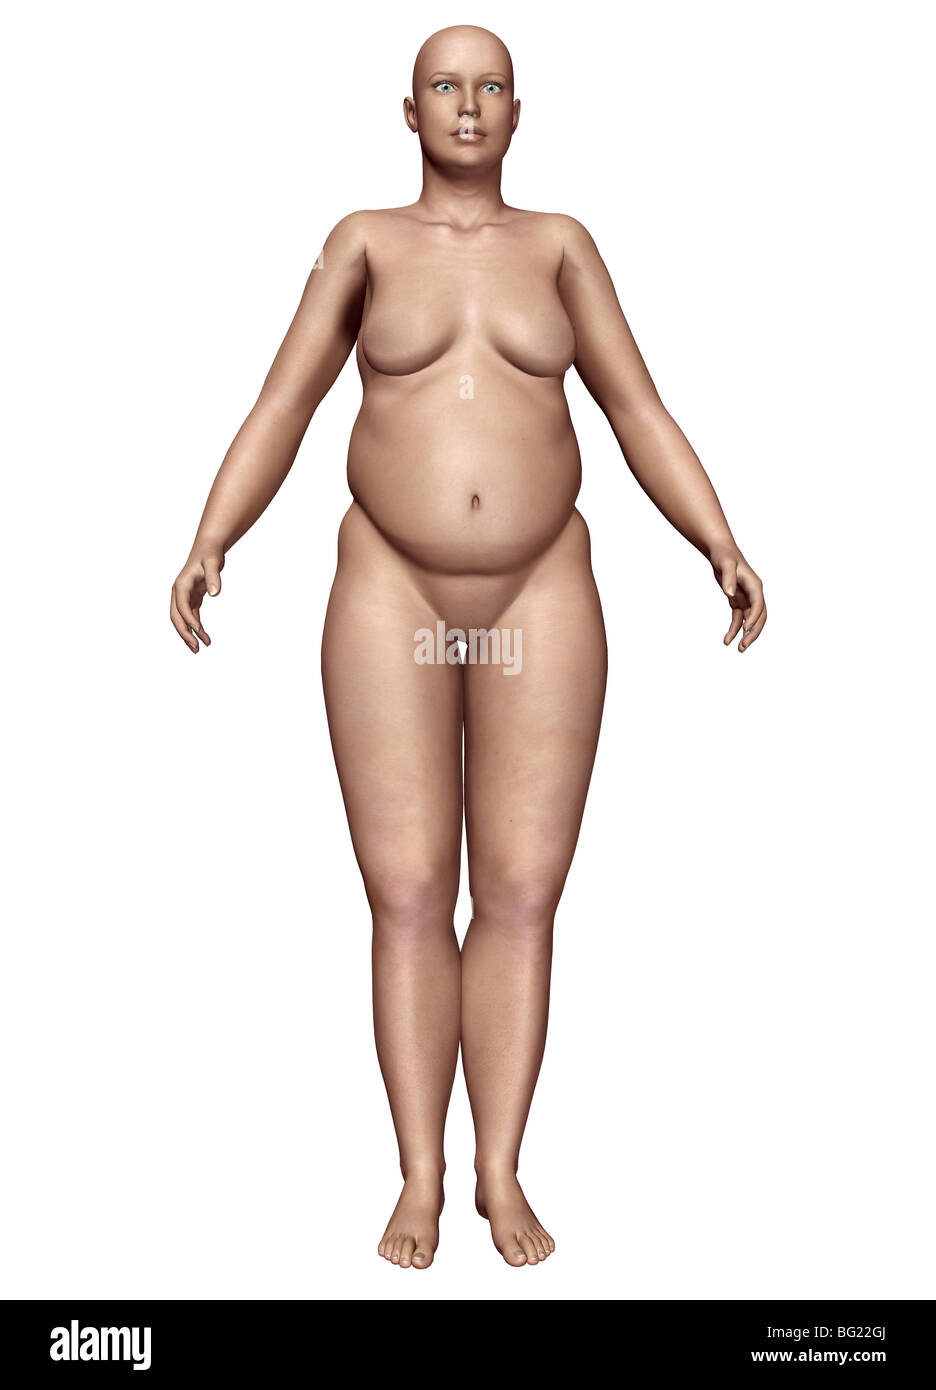 Female endomorph body type, illustration - Stock Image - F038/5688 -  Science Photo Library